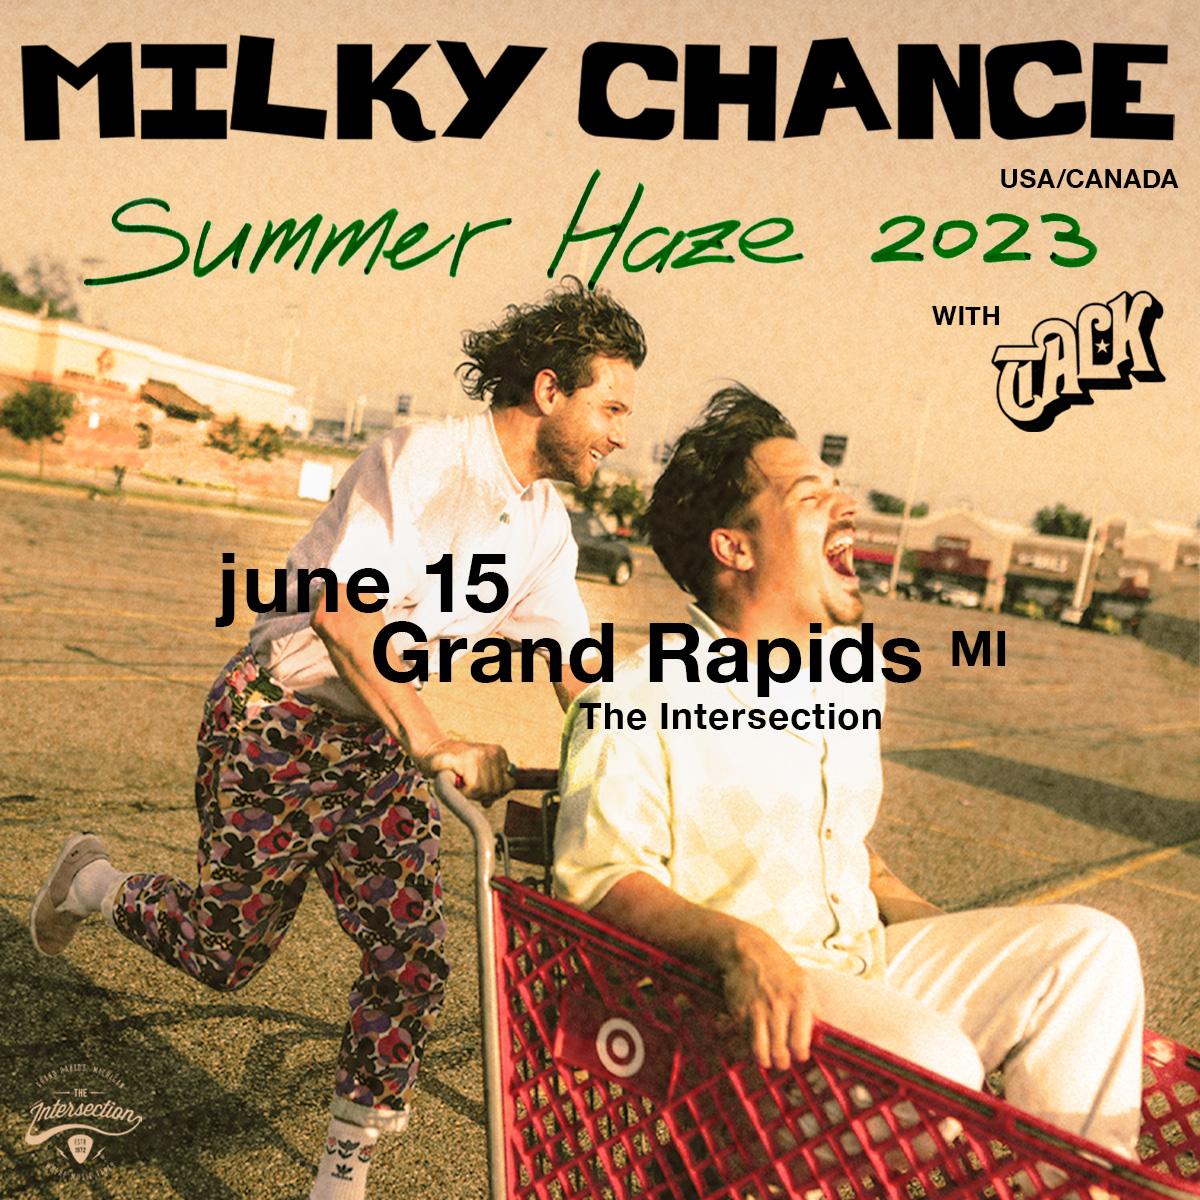 milky chance tour bus